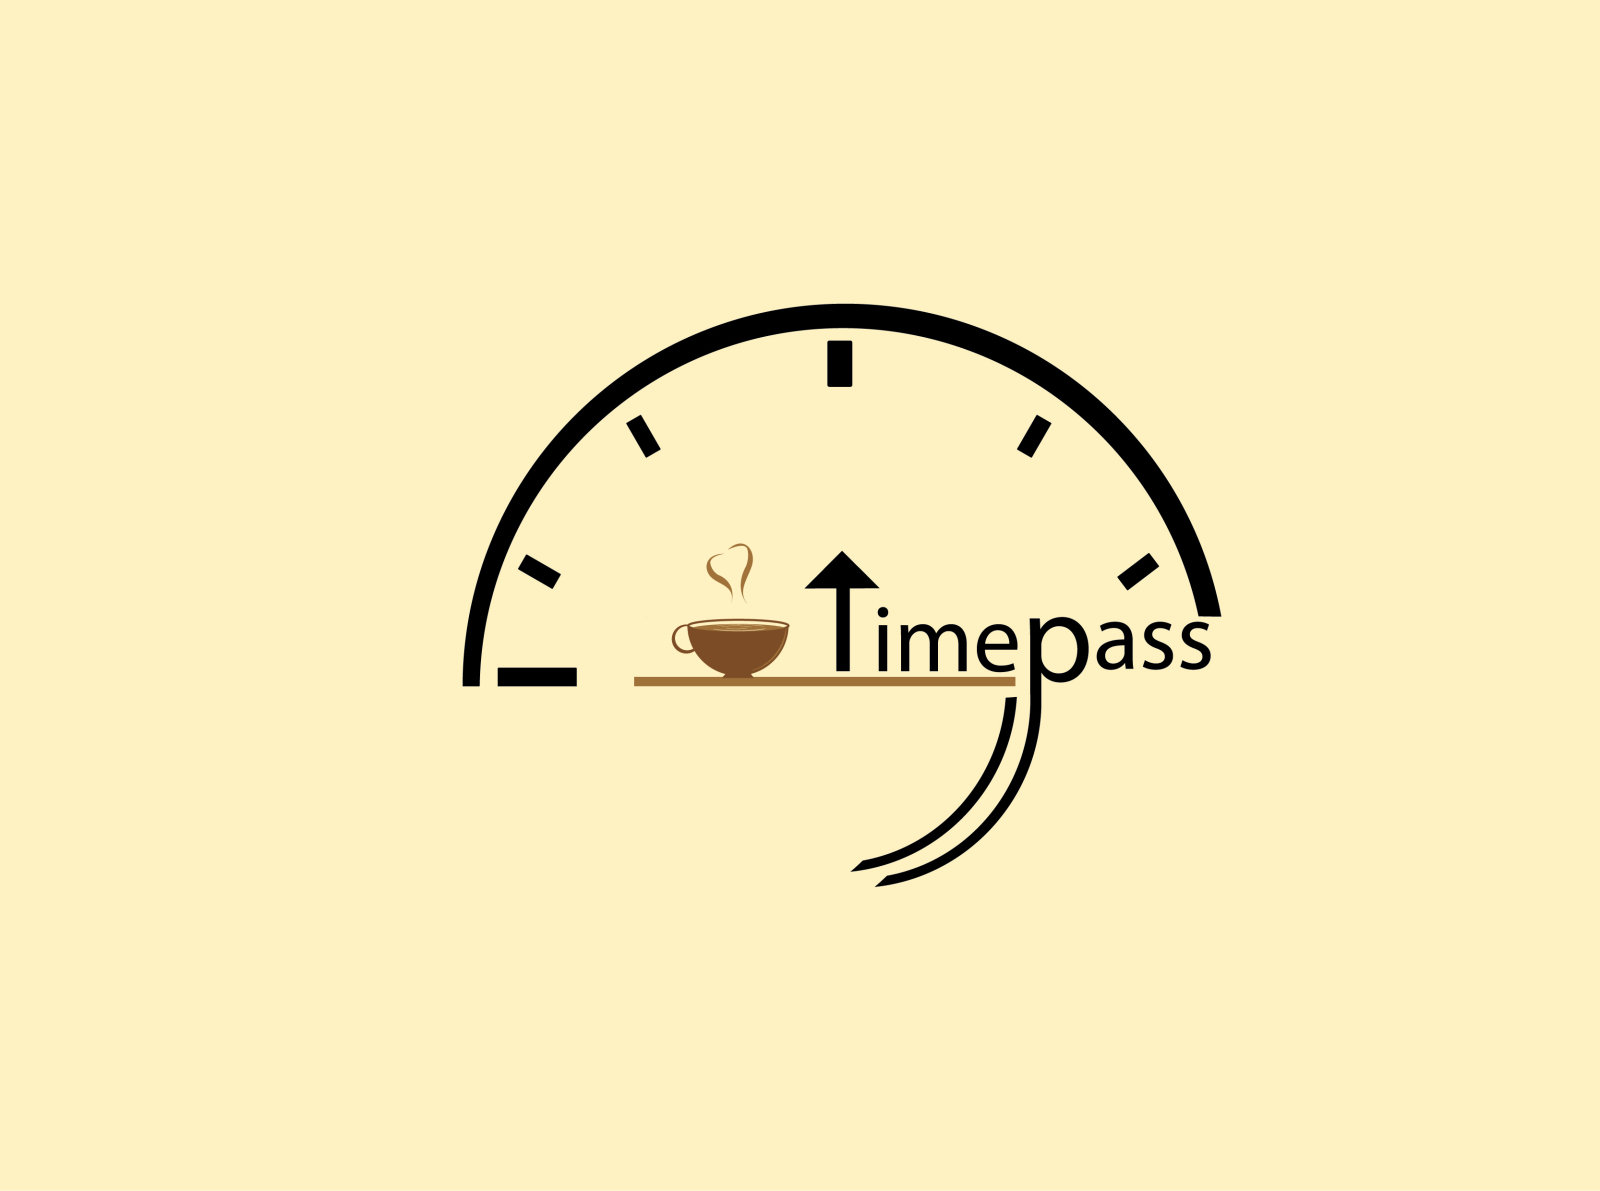 Timepass Logo by Sovana Siddika on Dribbble